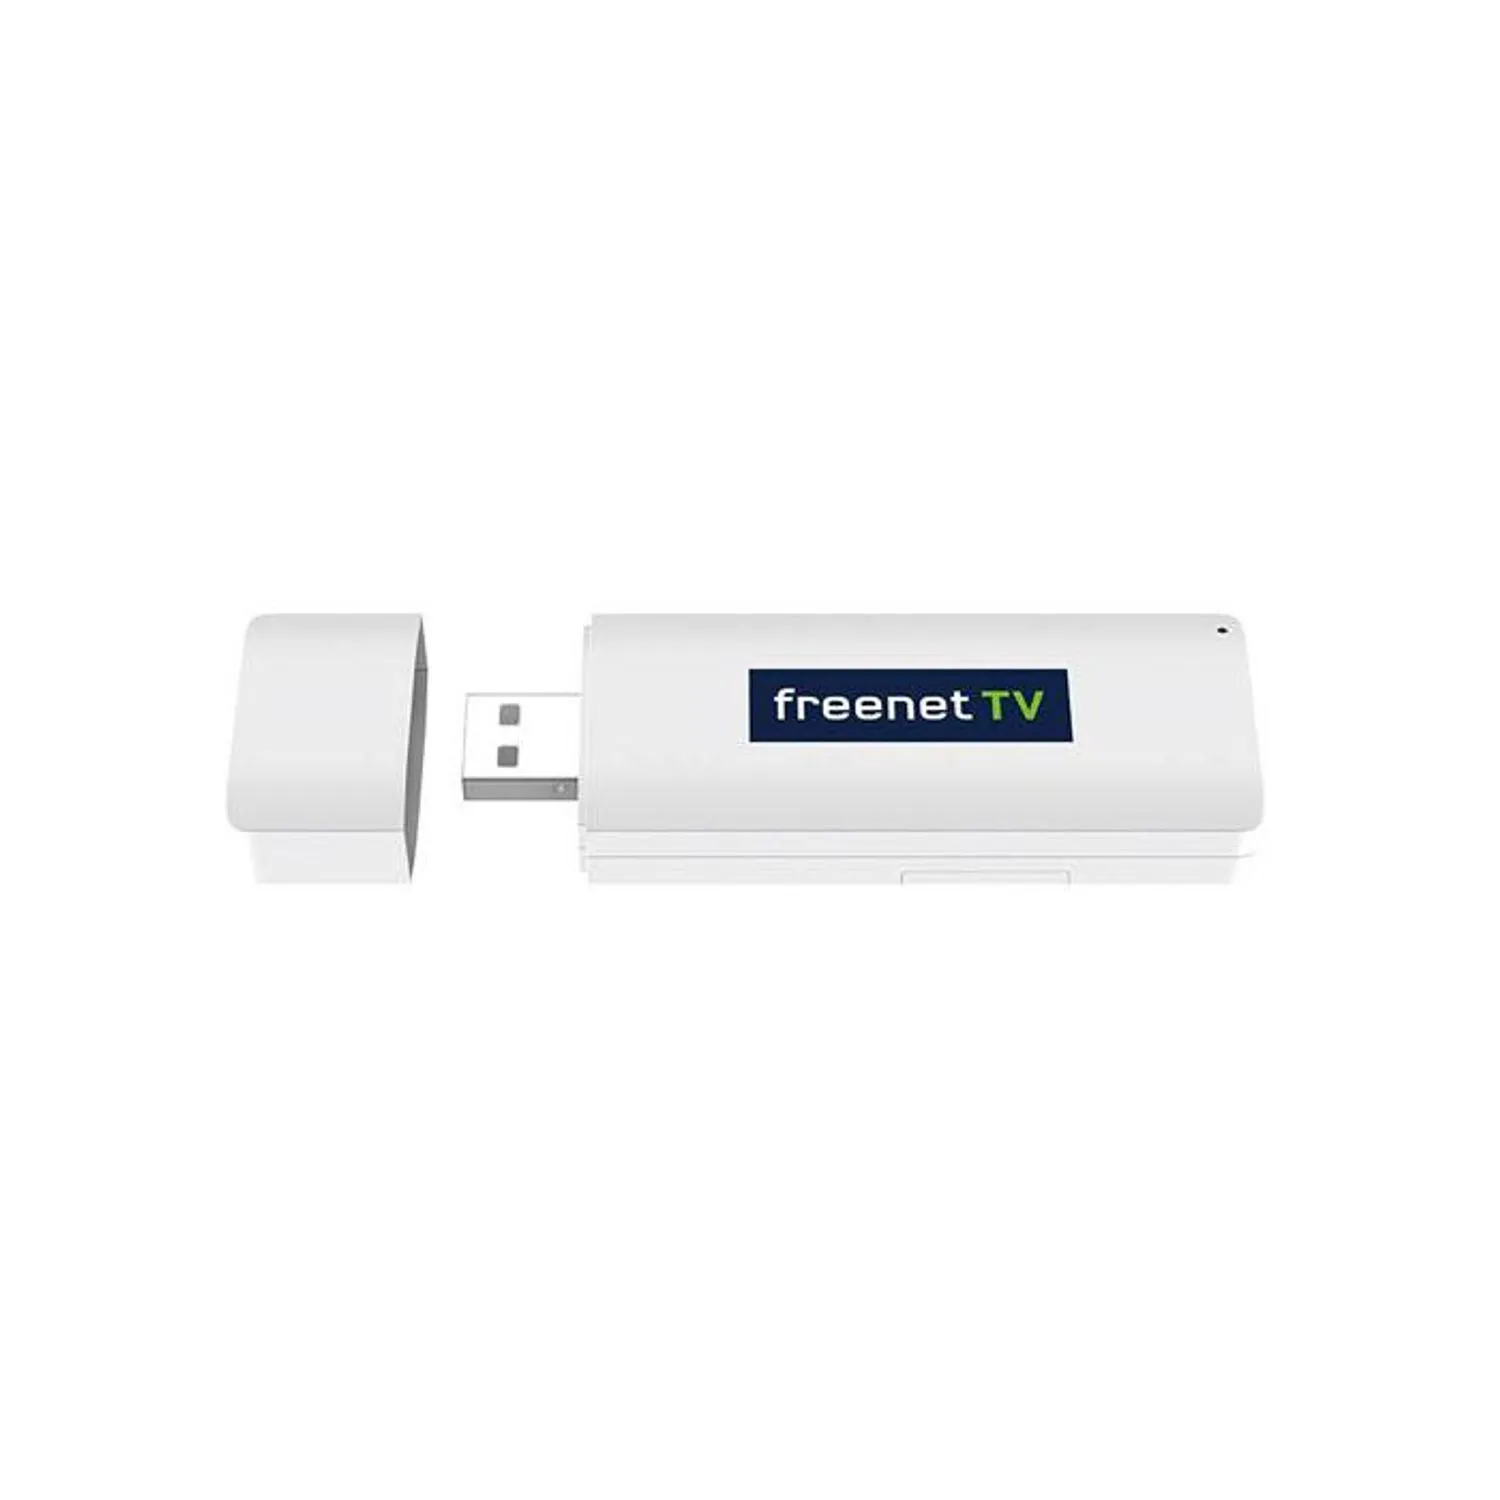 freenet TV USB Stick